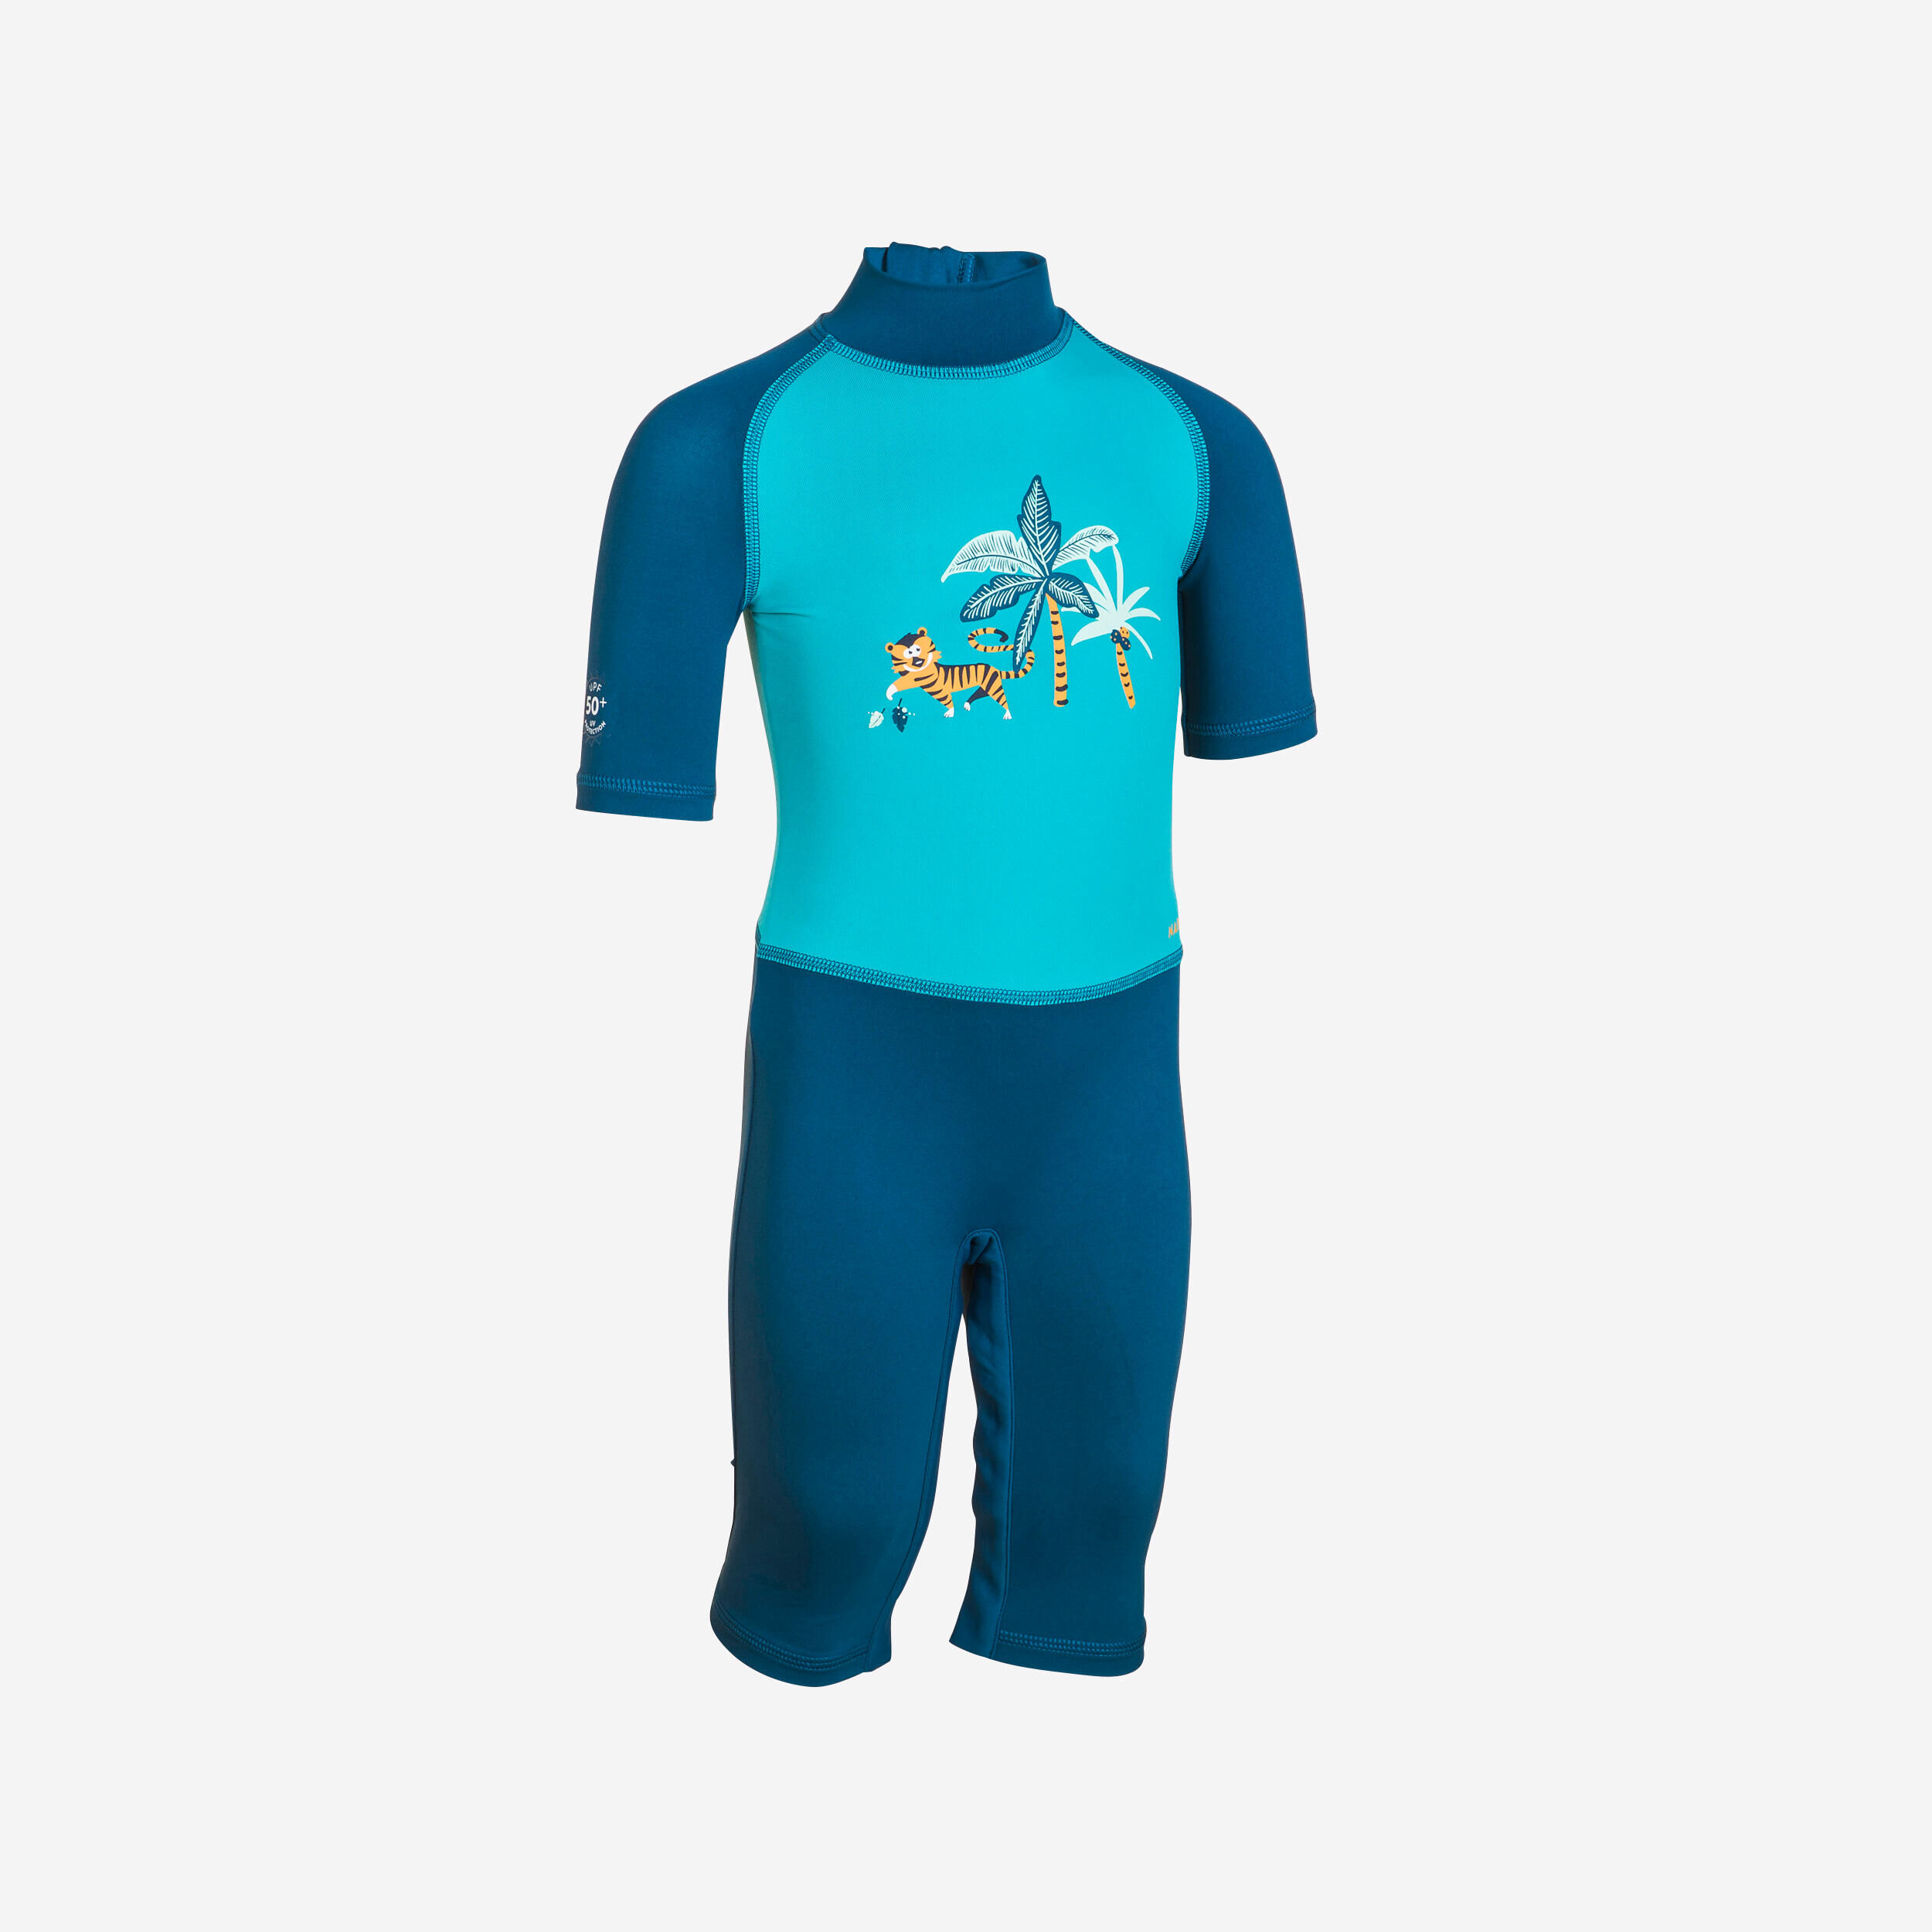 NABAIJI Baby / Kids’ Short-Sleeved Anti-UV Swimming Wetsuit - Blue with Tiger Print